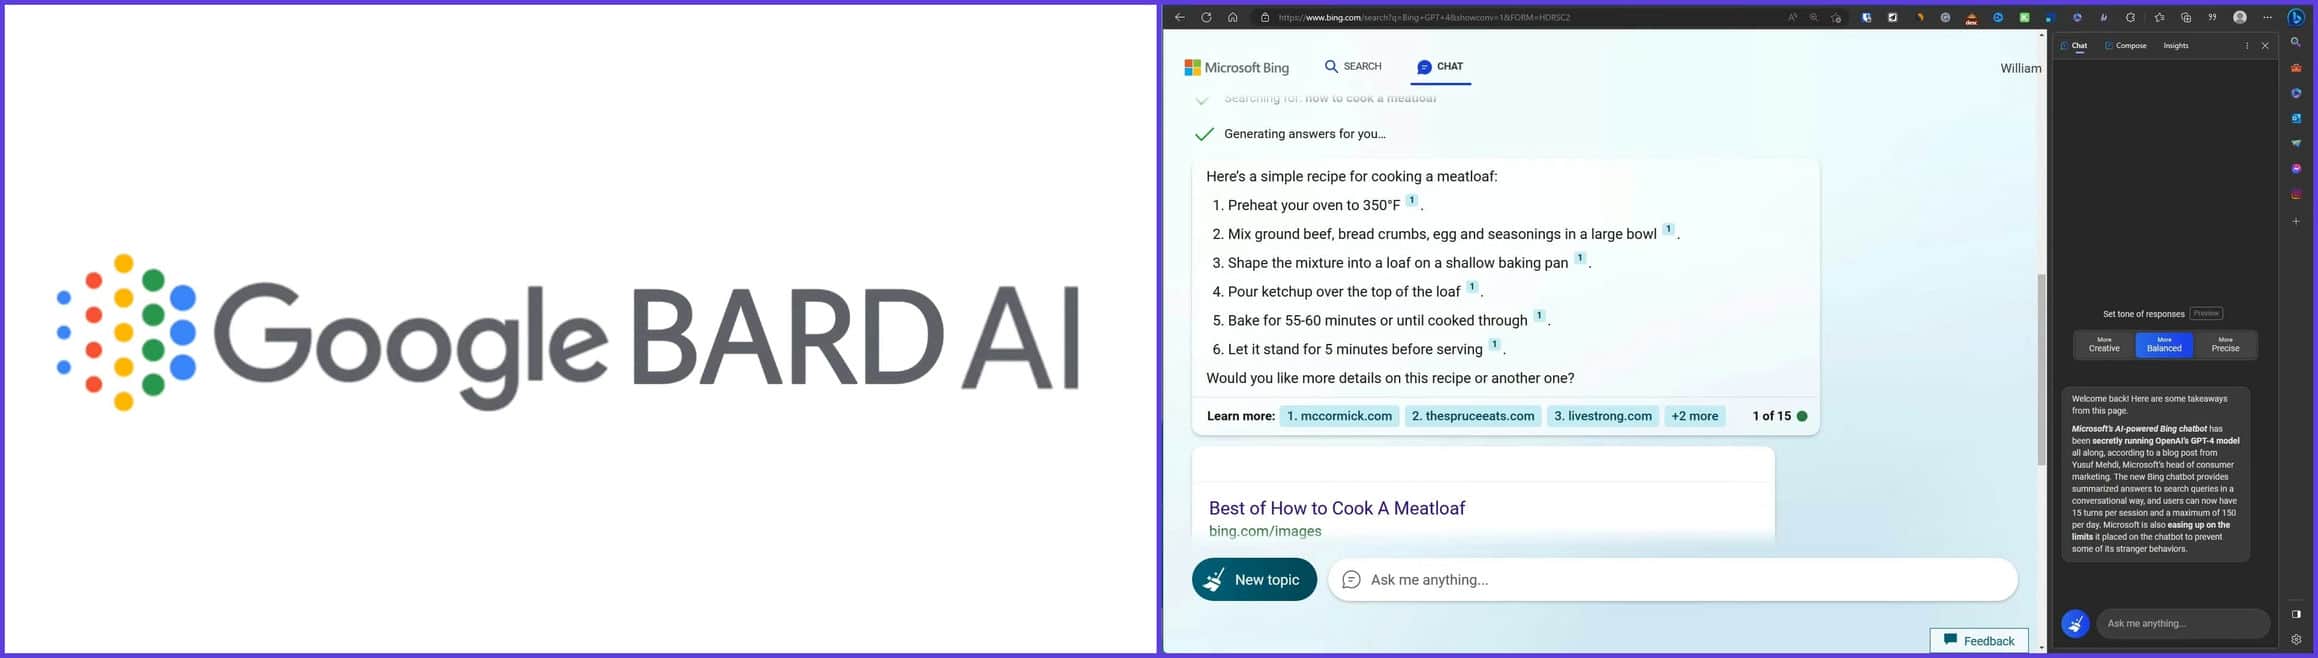 Bard vs Bing - The Race of AI